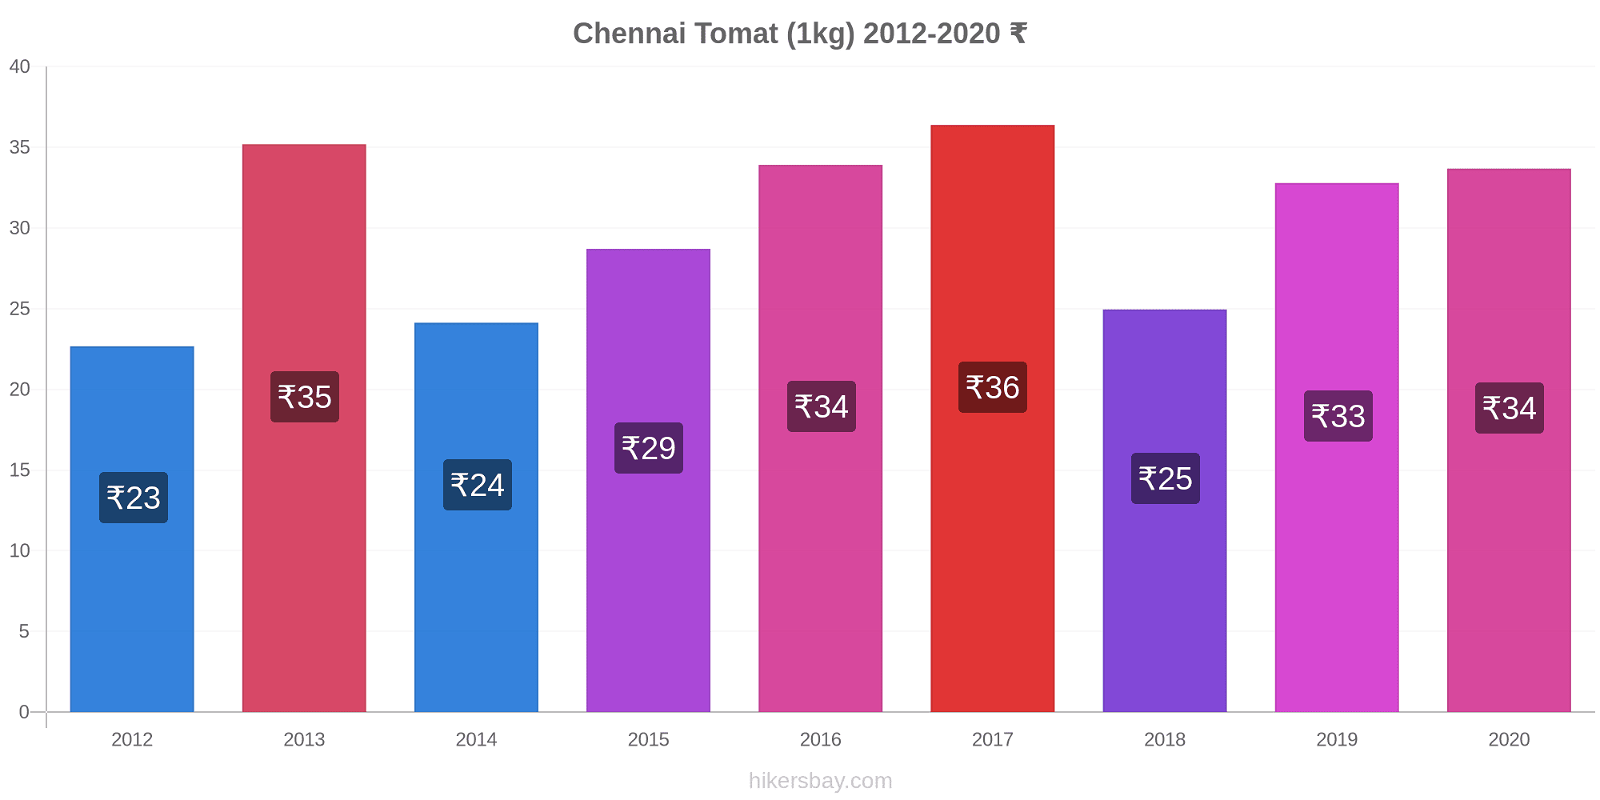 Chennai perubahan harga Tomat (1kg) hikersbay.com